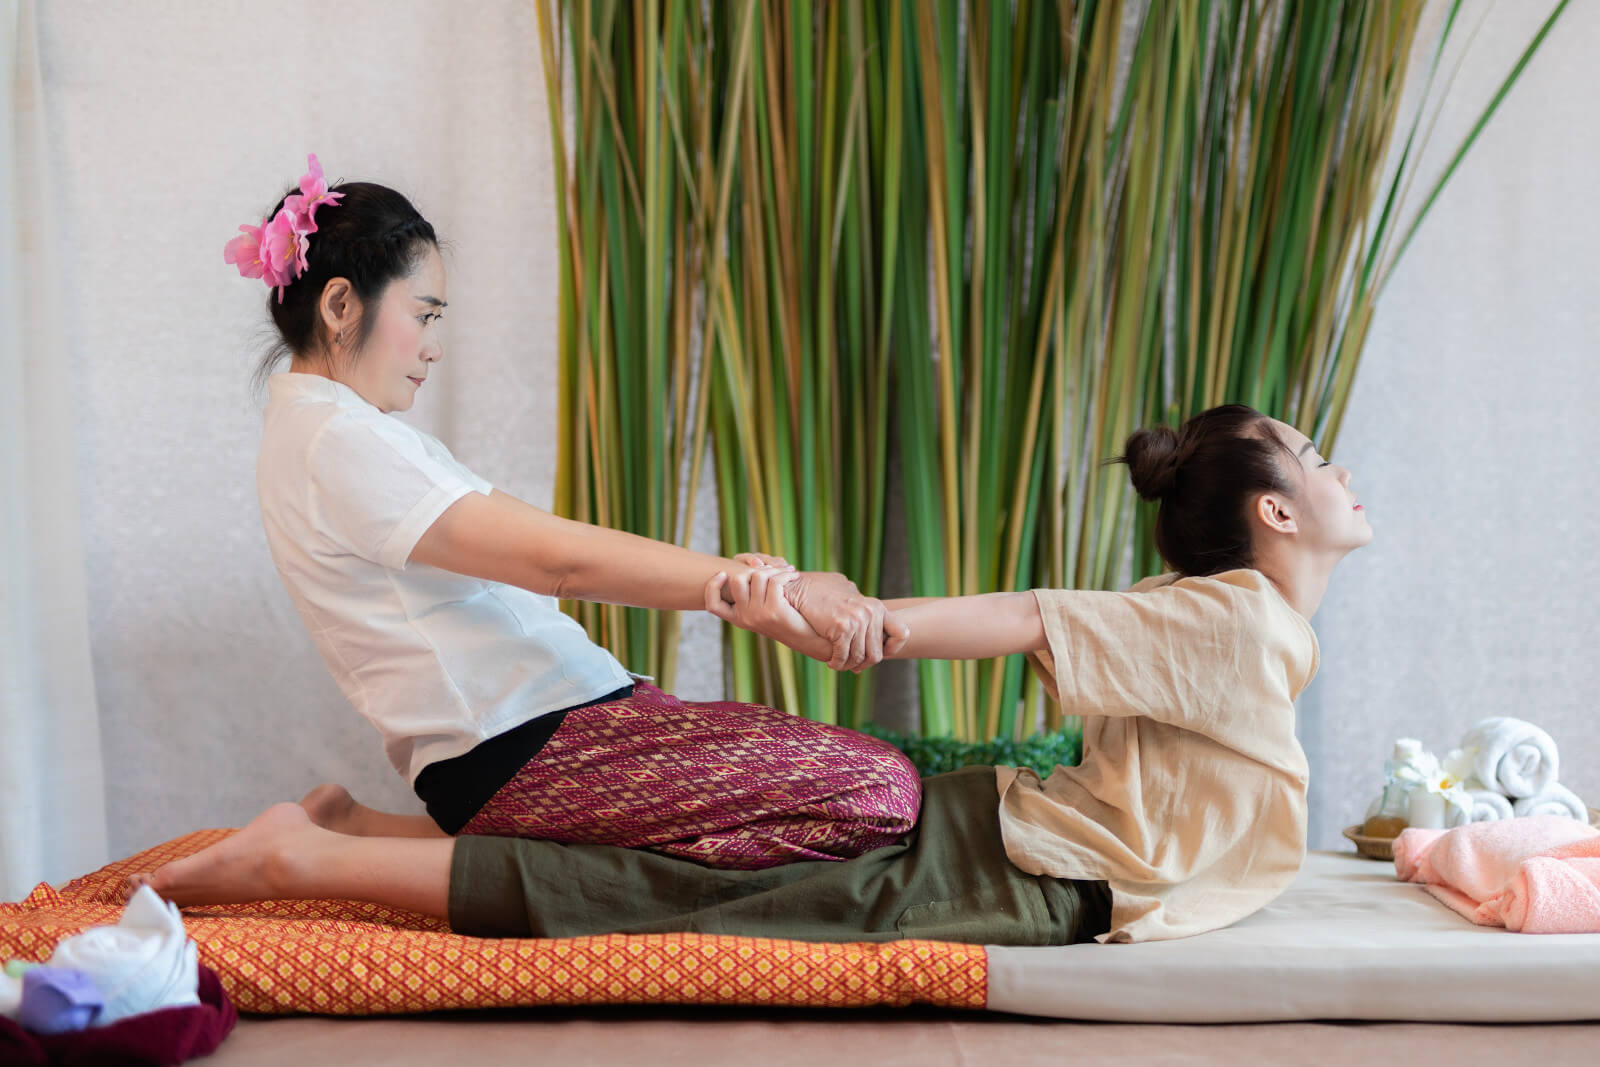 daniel sortino add thai yoga massage video photo